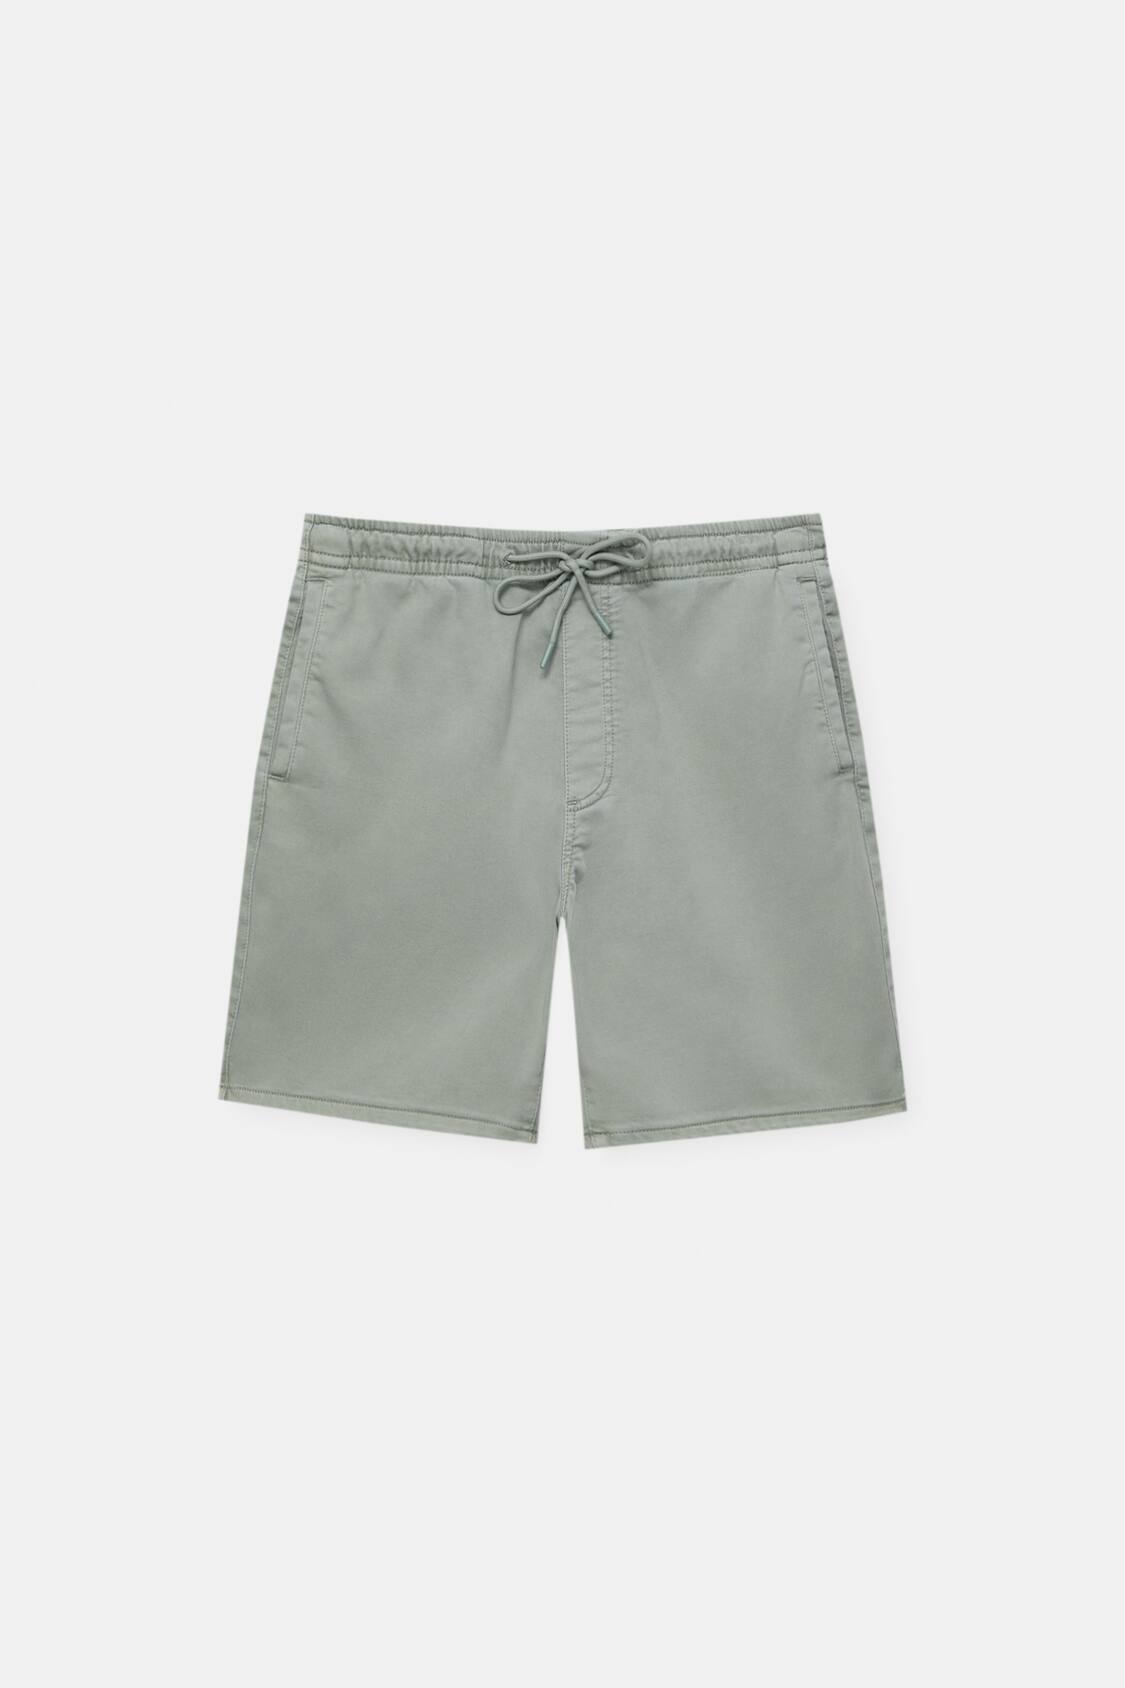 PULL&BEAR BERMUDA - Shorts - dark grey - Zalando.de